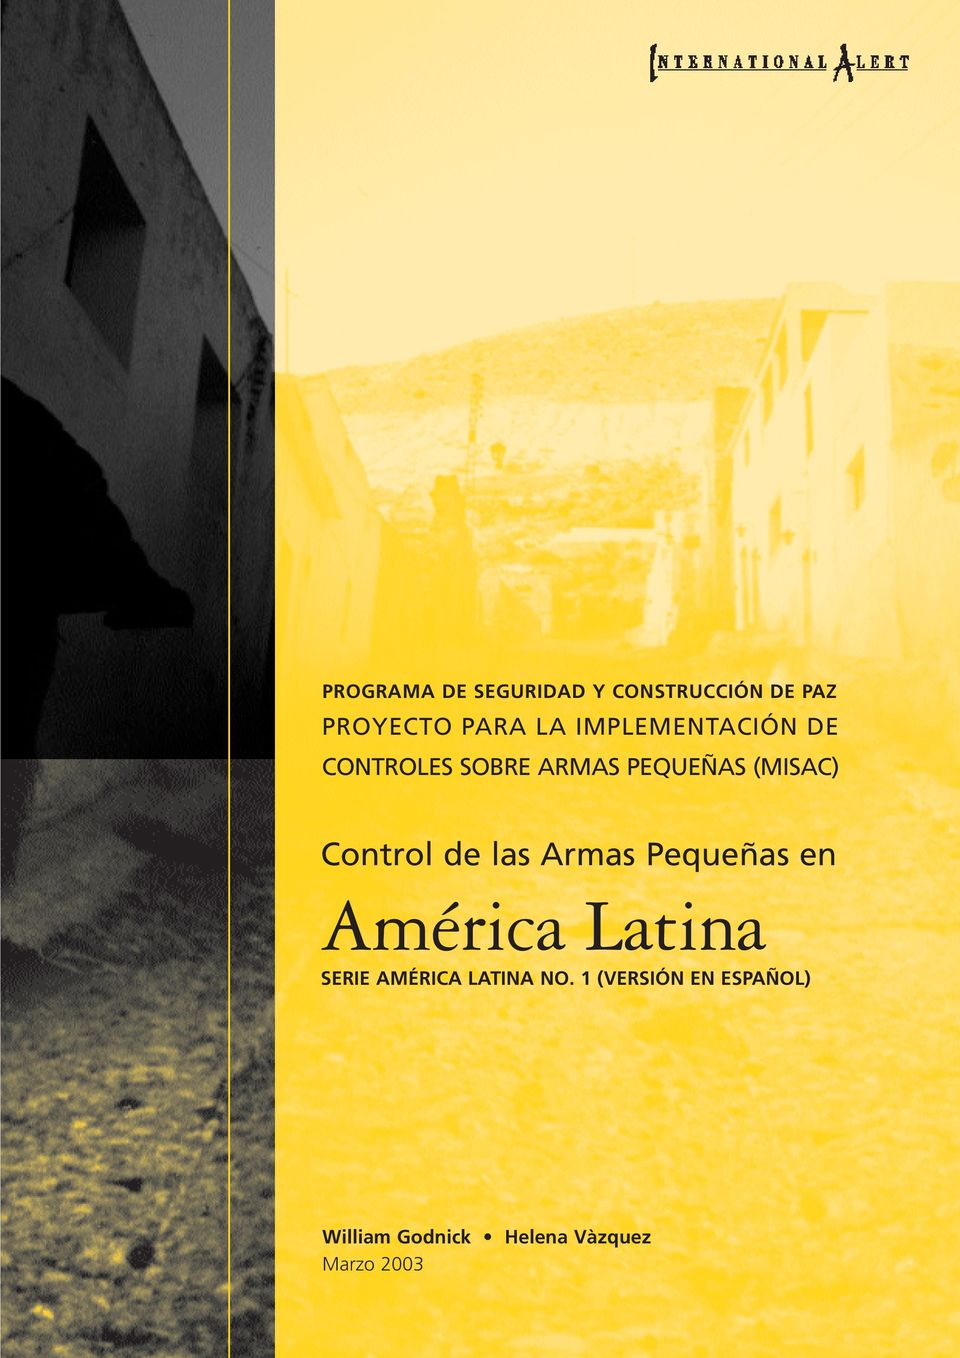 Control de las Armas Pequeñas en América Latina SERIE AMÉRICA